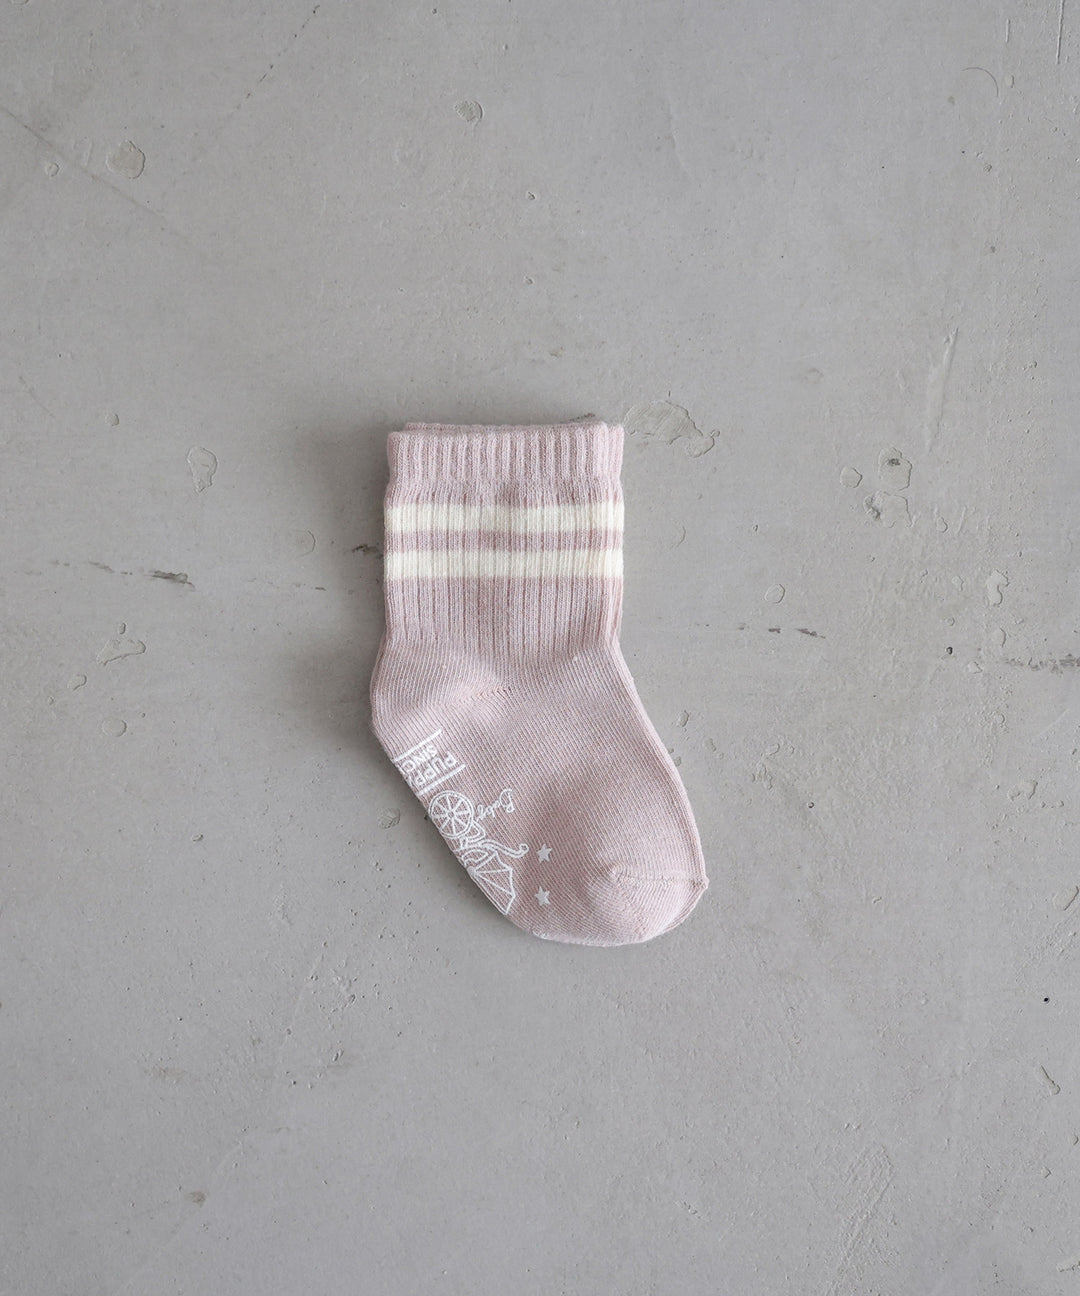 Babies & kids socks